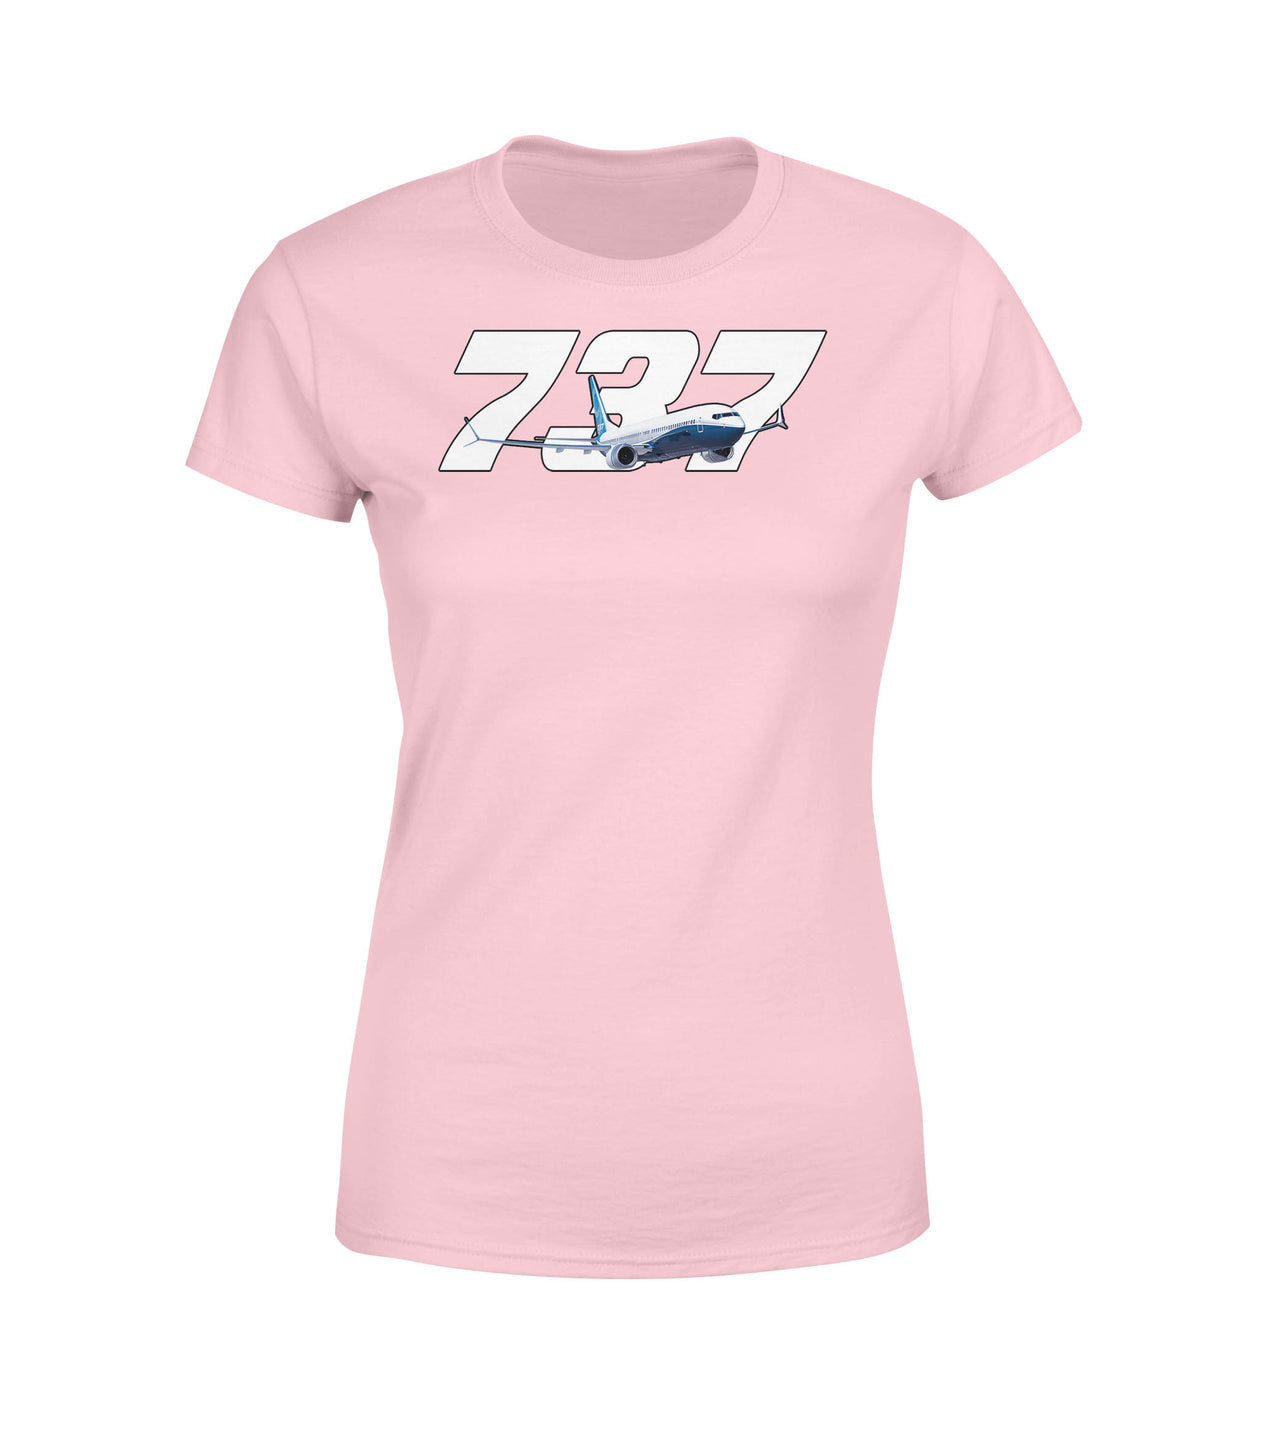 Super Boeing 737 Designed Women T-Shirts